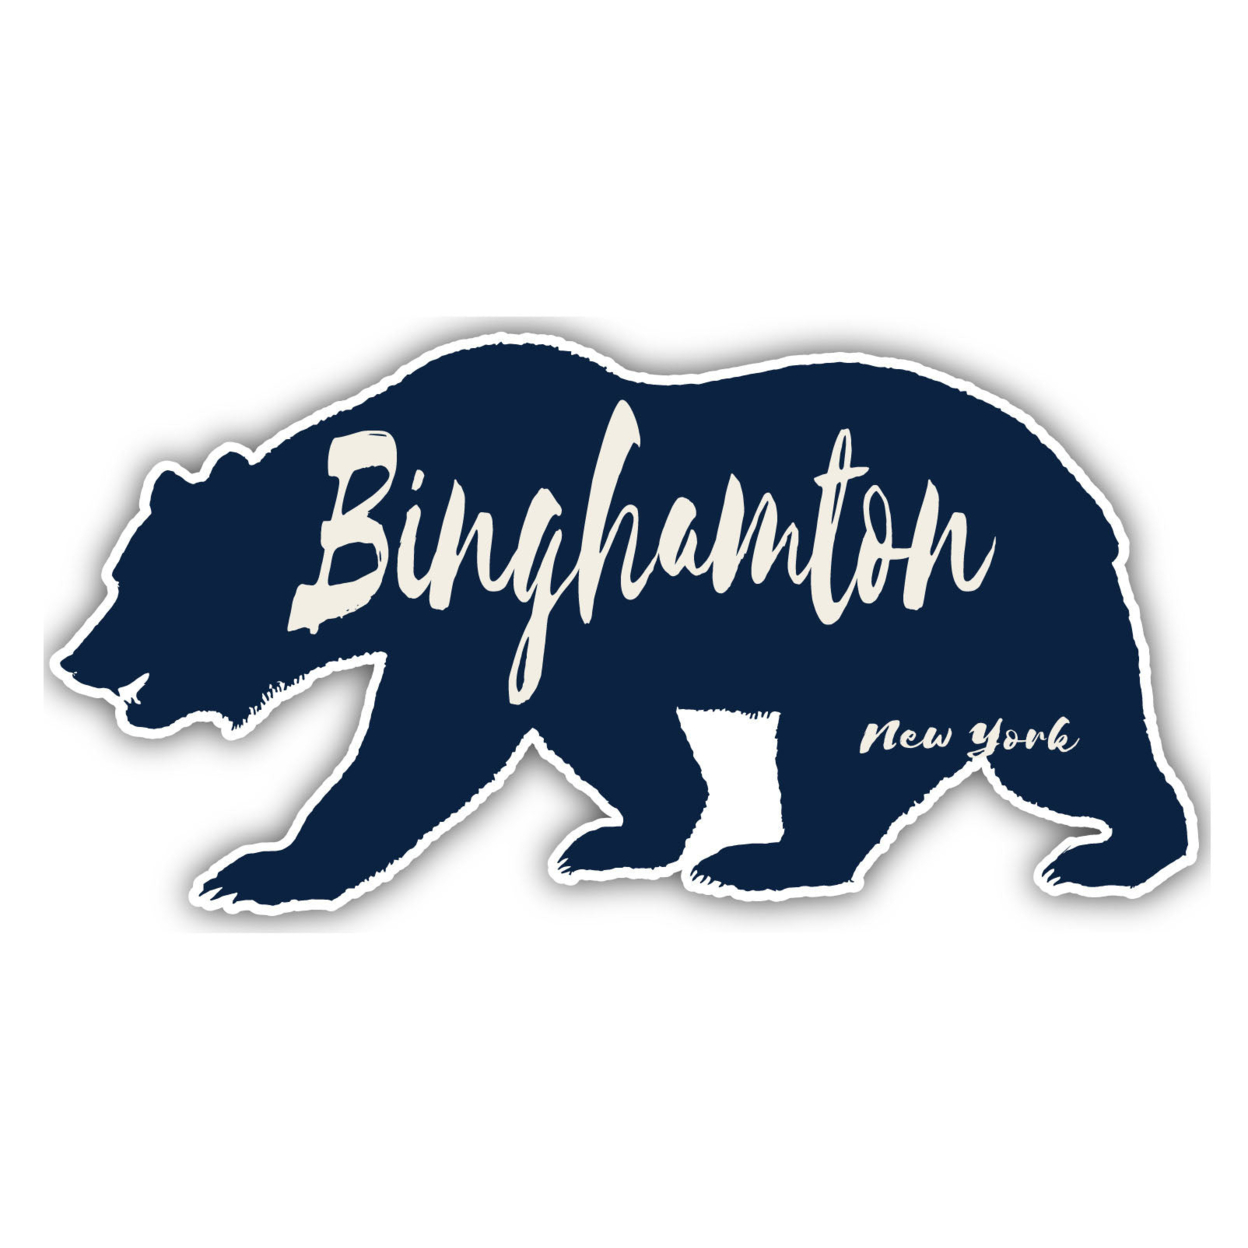 Binghamton New York Souvenir Decorative Stickers (Choose Theme And Size) - 4-Pack, 6-Inch, Bear